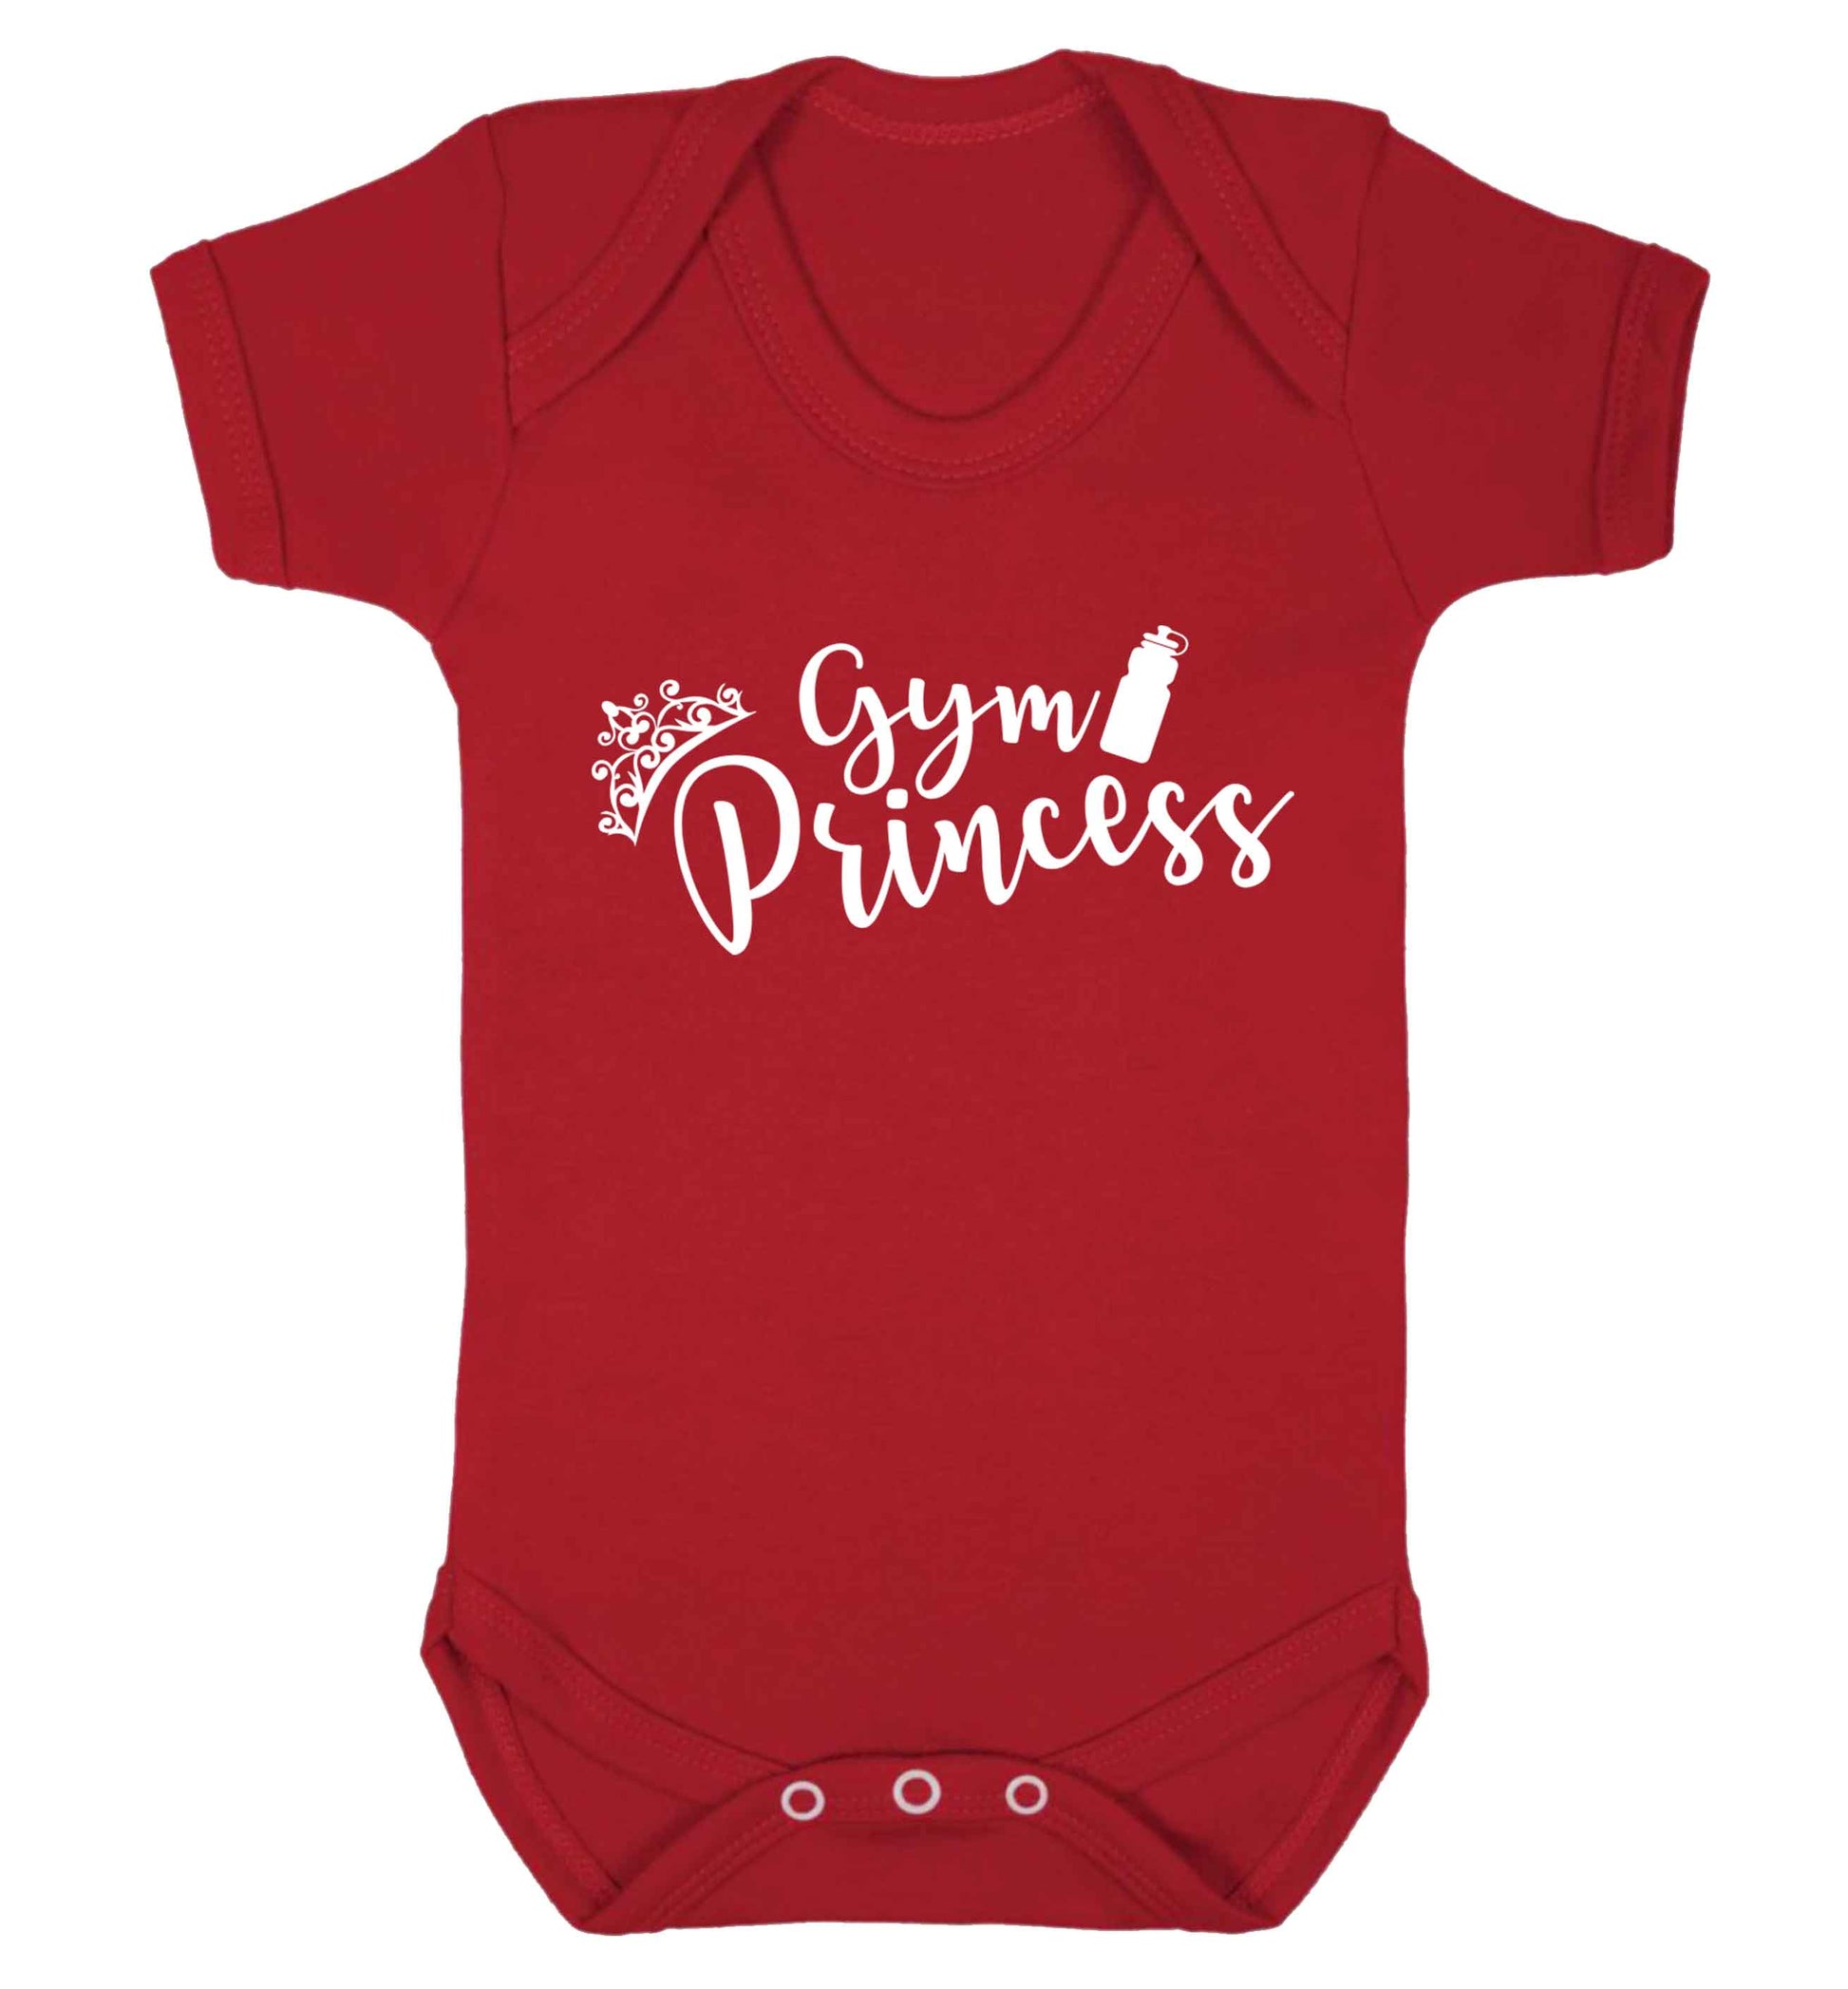 Gym princess Baby Vest red 18-24 months